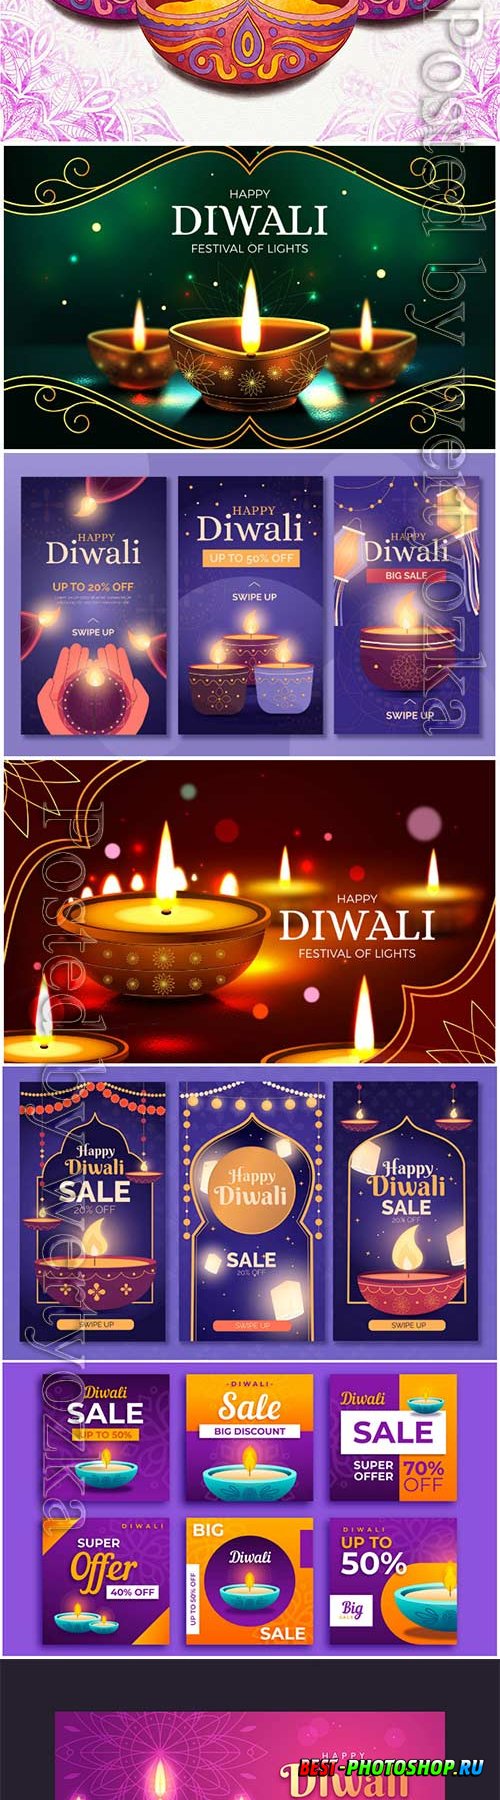 Diwali festival background